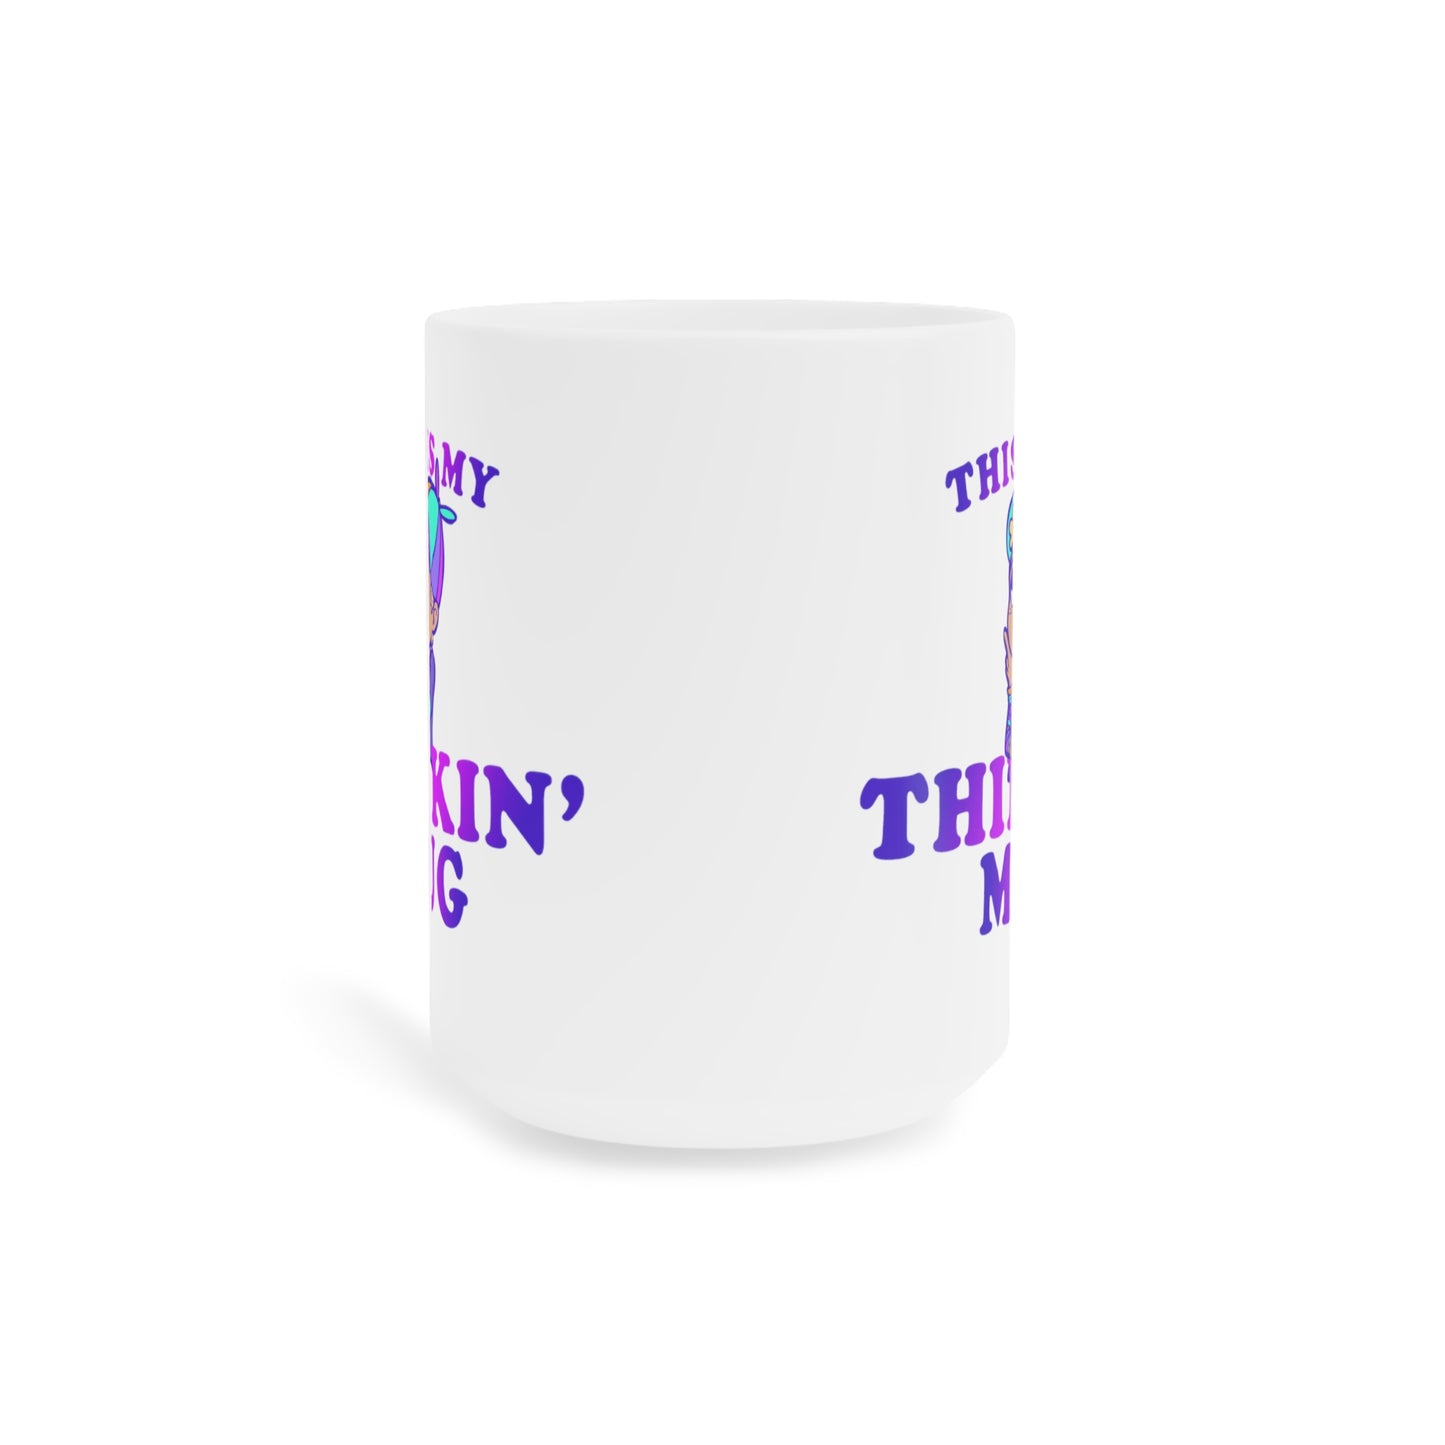 "Thinkin' Mug" Kid - Ceramic Mugs (11oz/15oz/20oz)